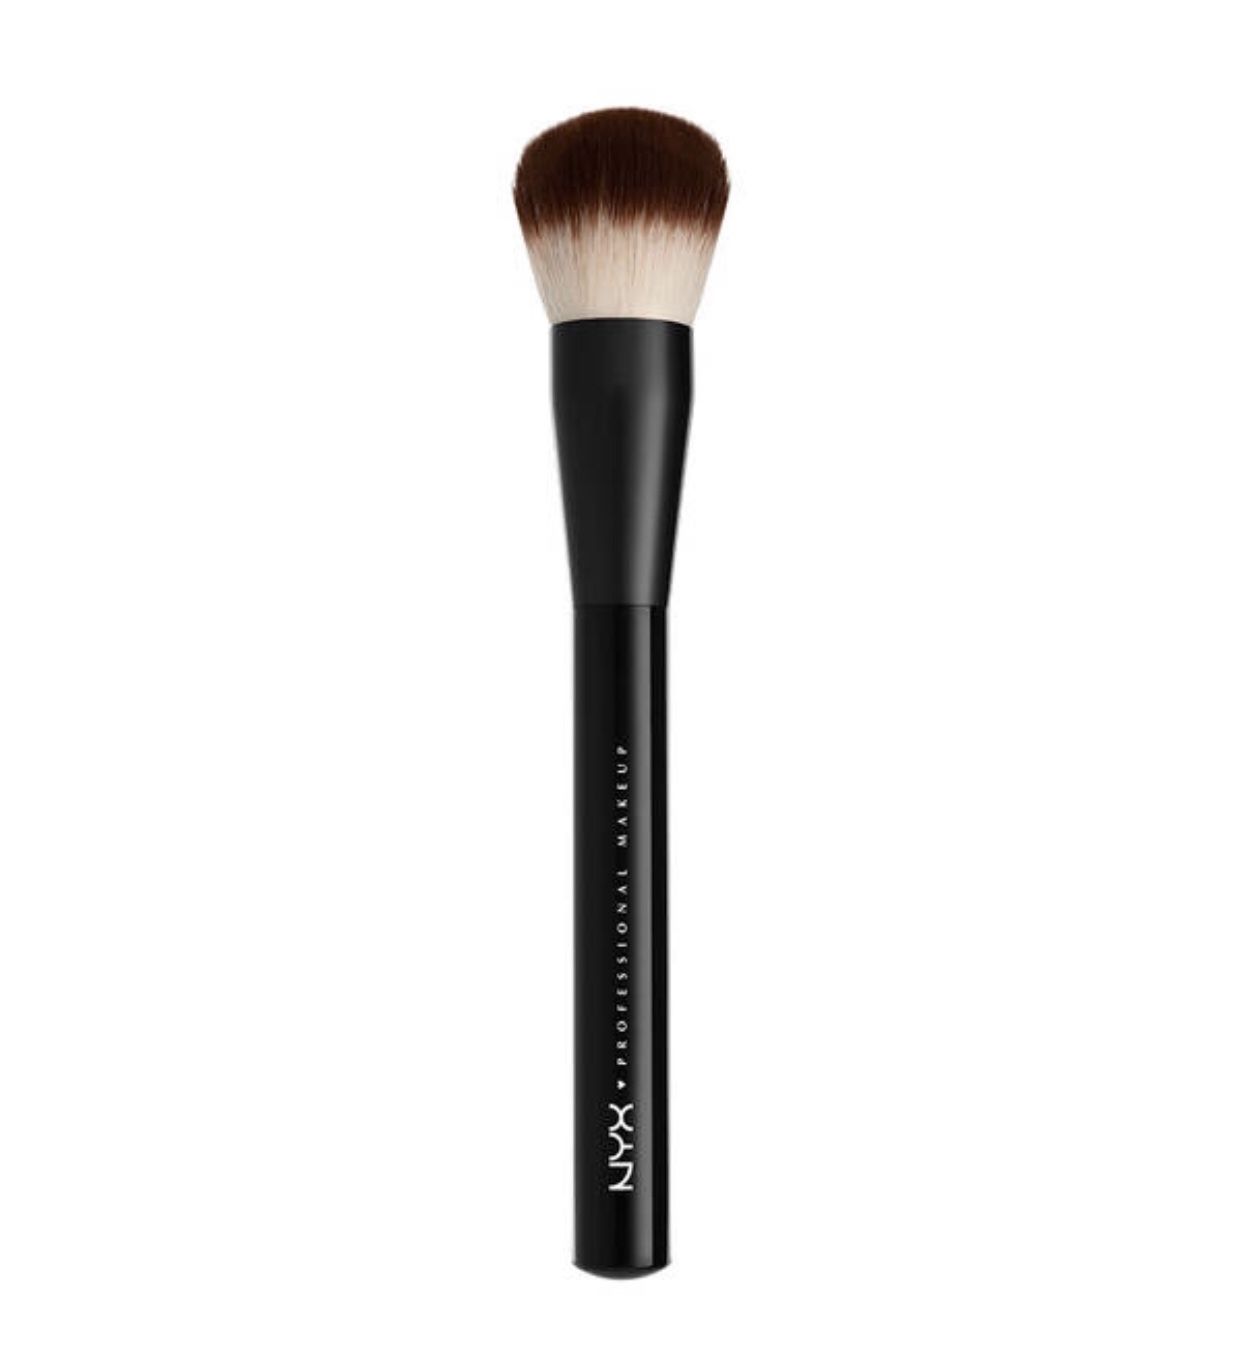 Pro Multi-Purpose Buffing Brush | NYX Professional Makeup 03